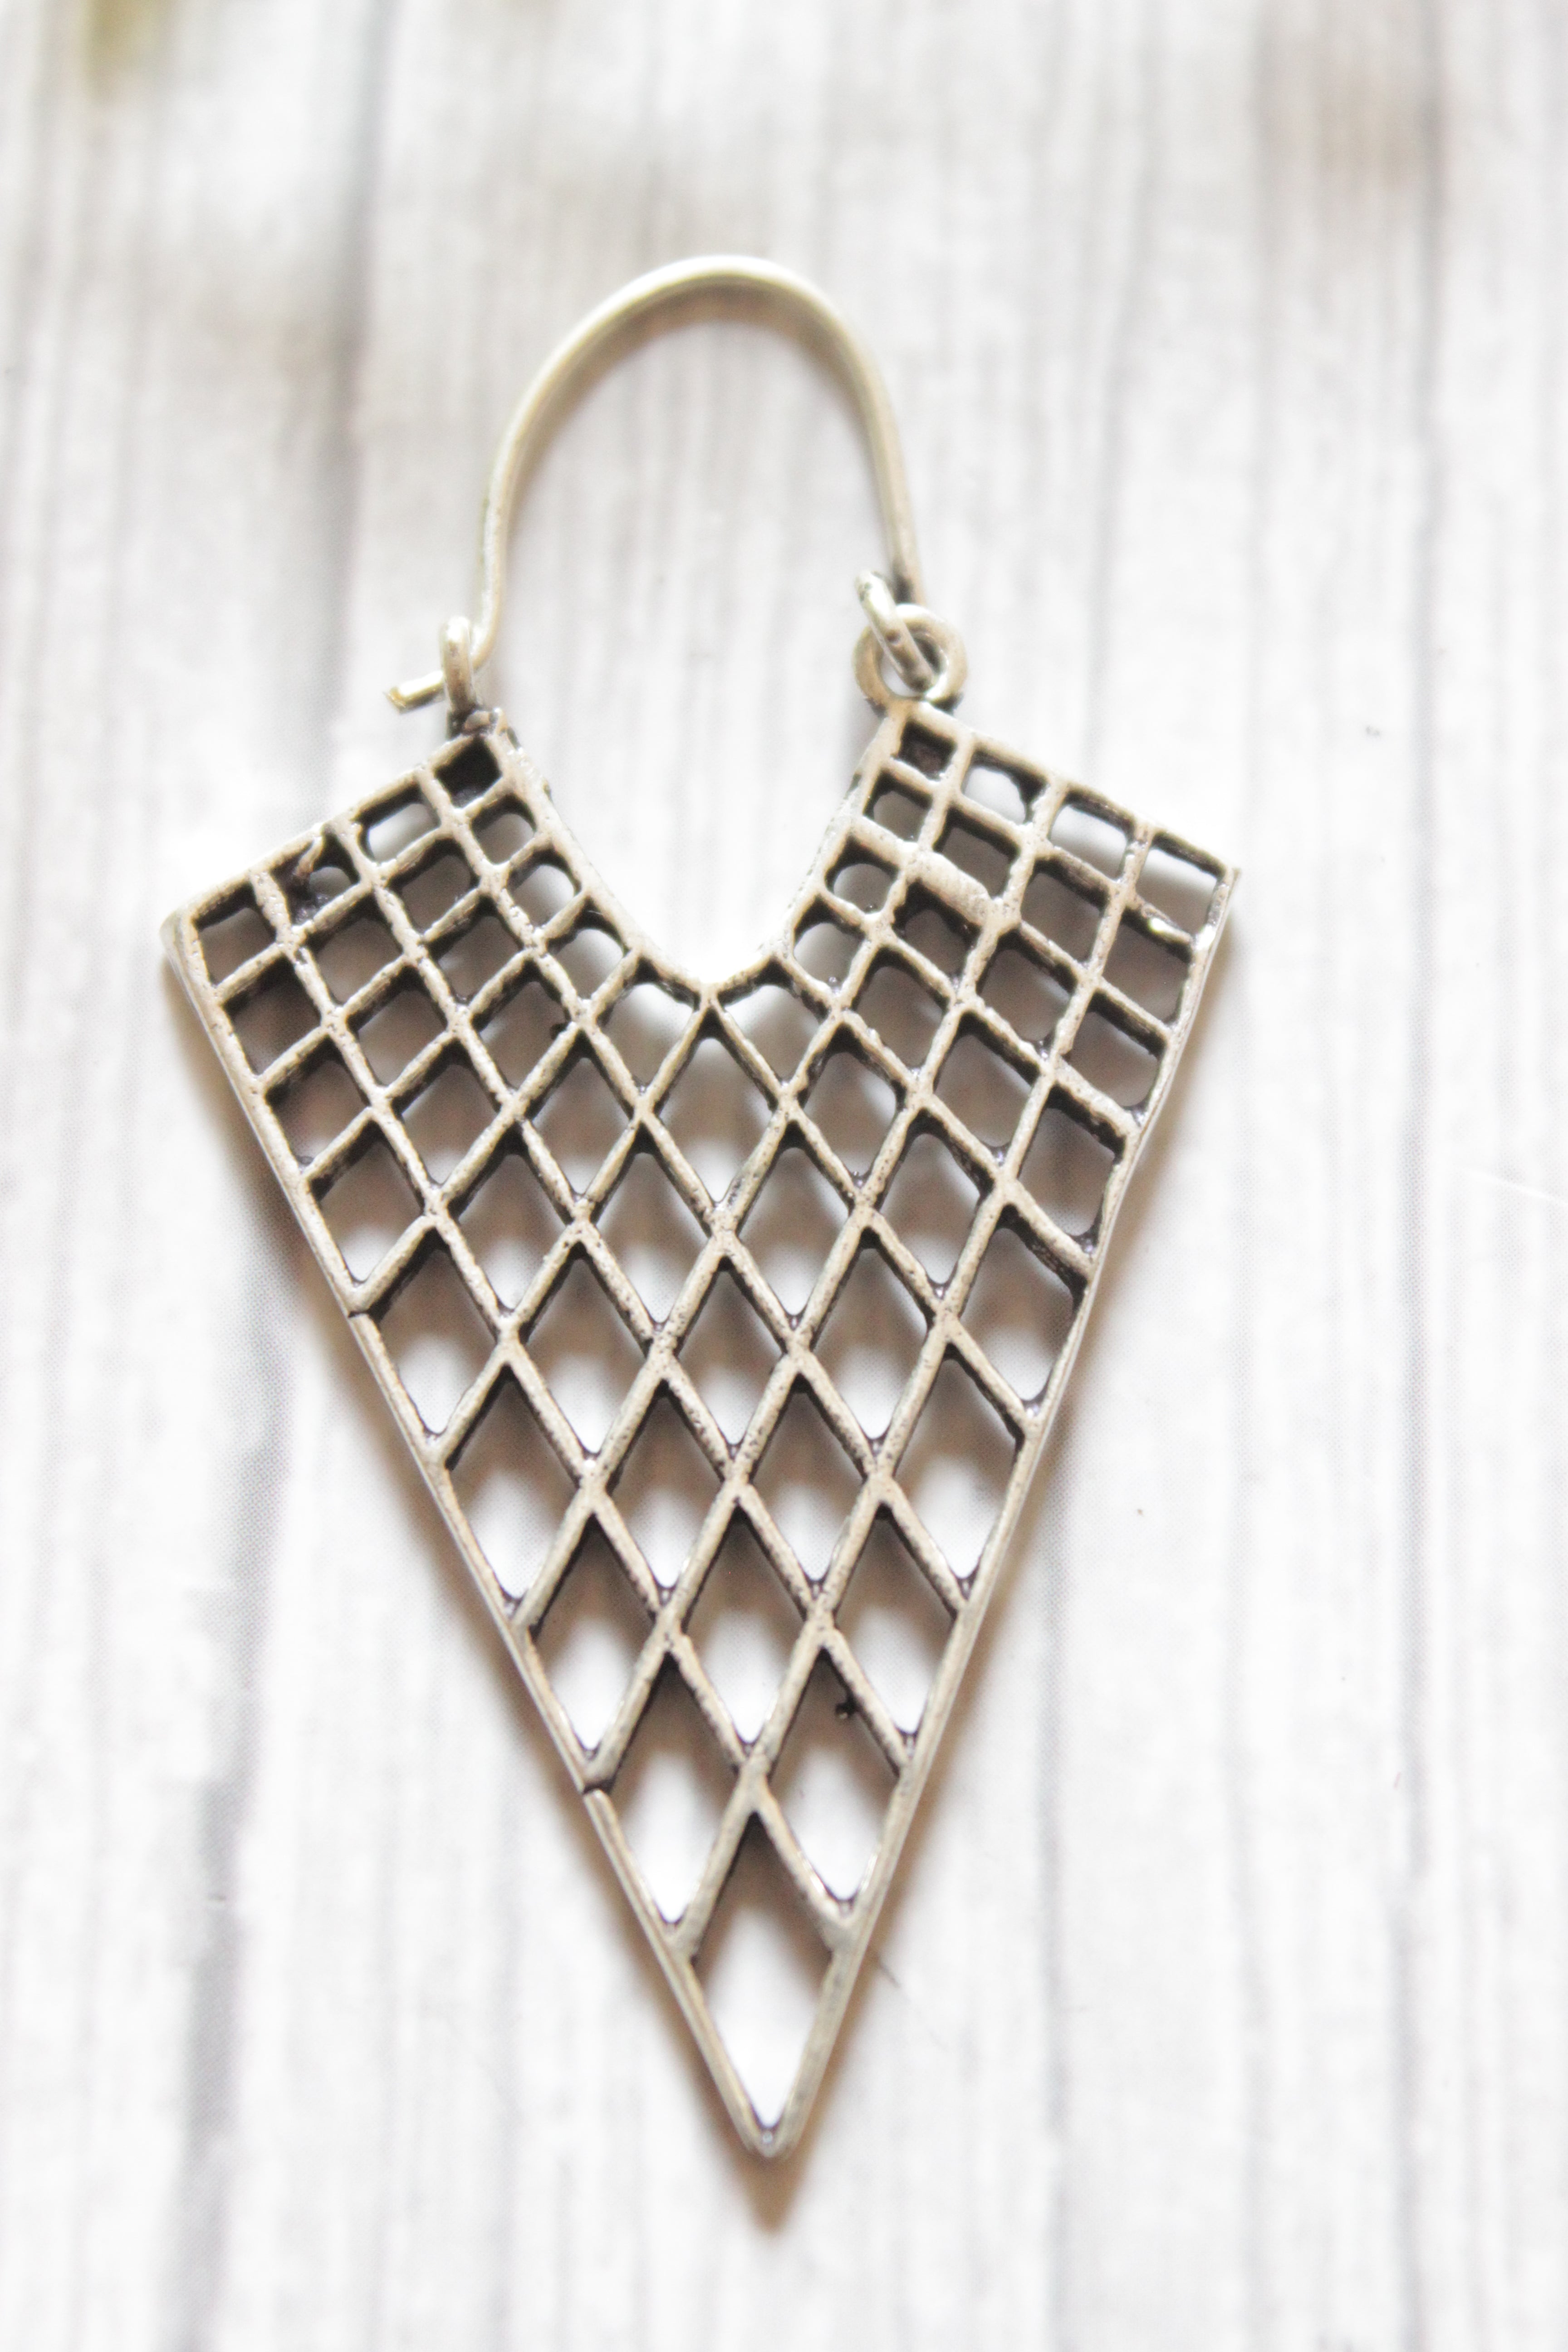 Oxidised Finish Triangular Mesh Brass Earrings